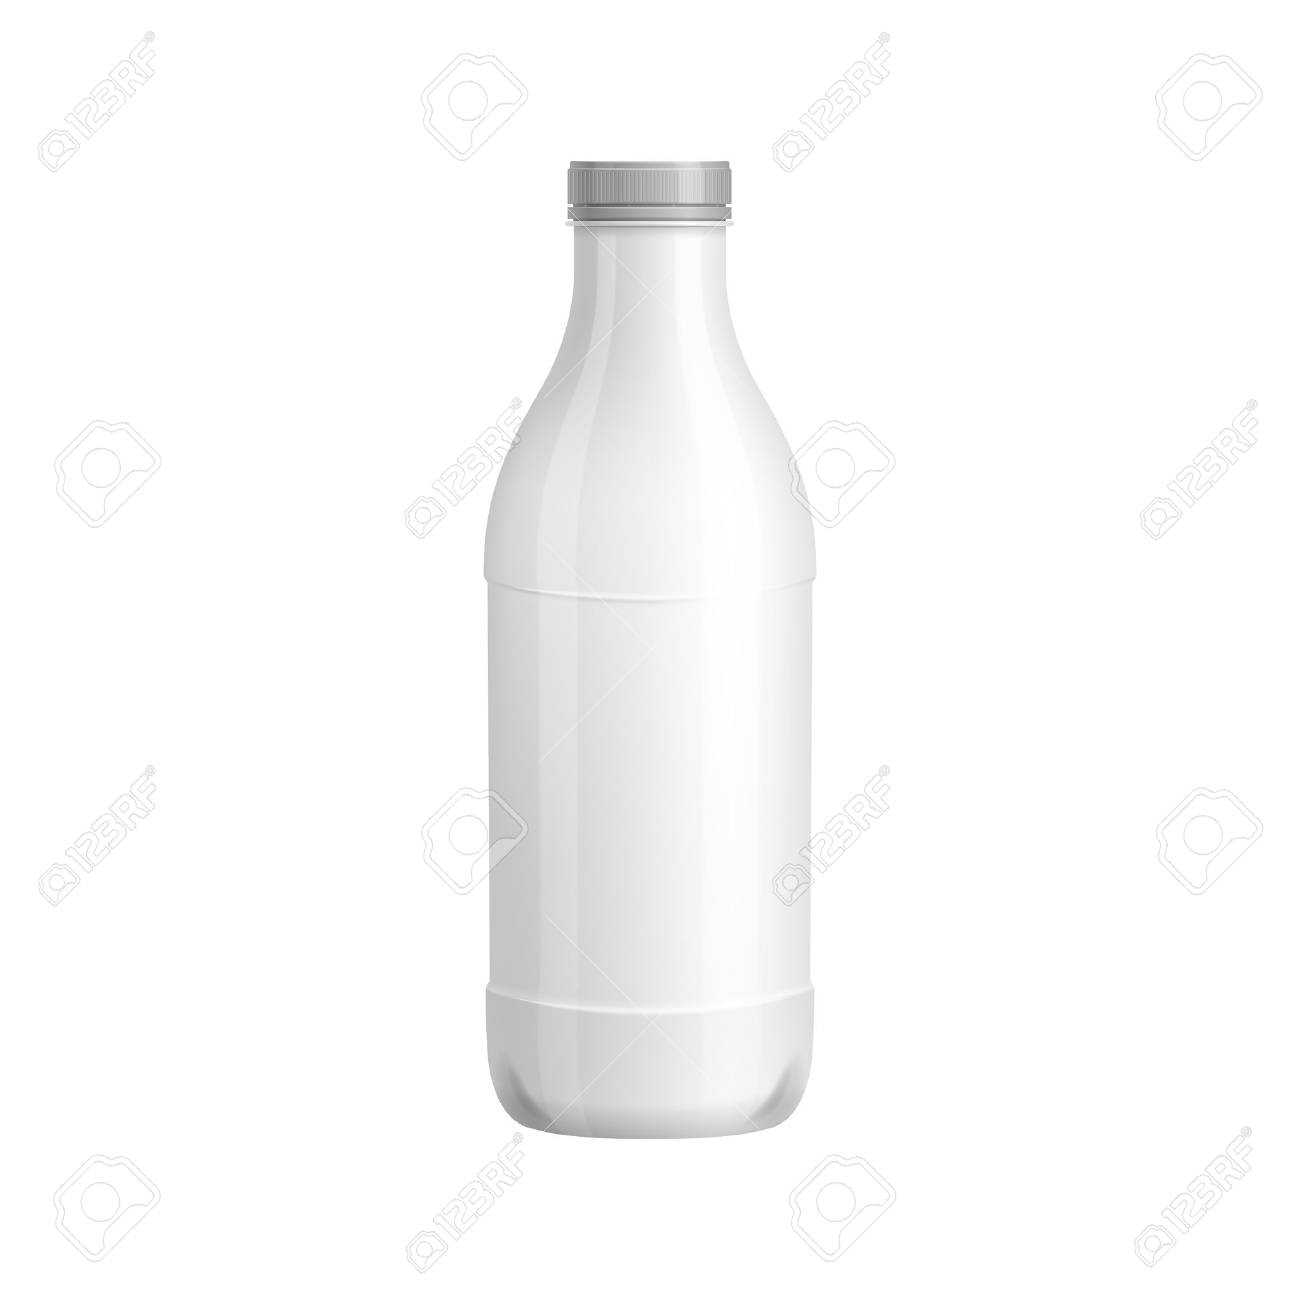 Plastic Bottle Template. For Milk Or Yogurt Product. Blank Packaging.. Inside Blank Packaging Templates